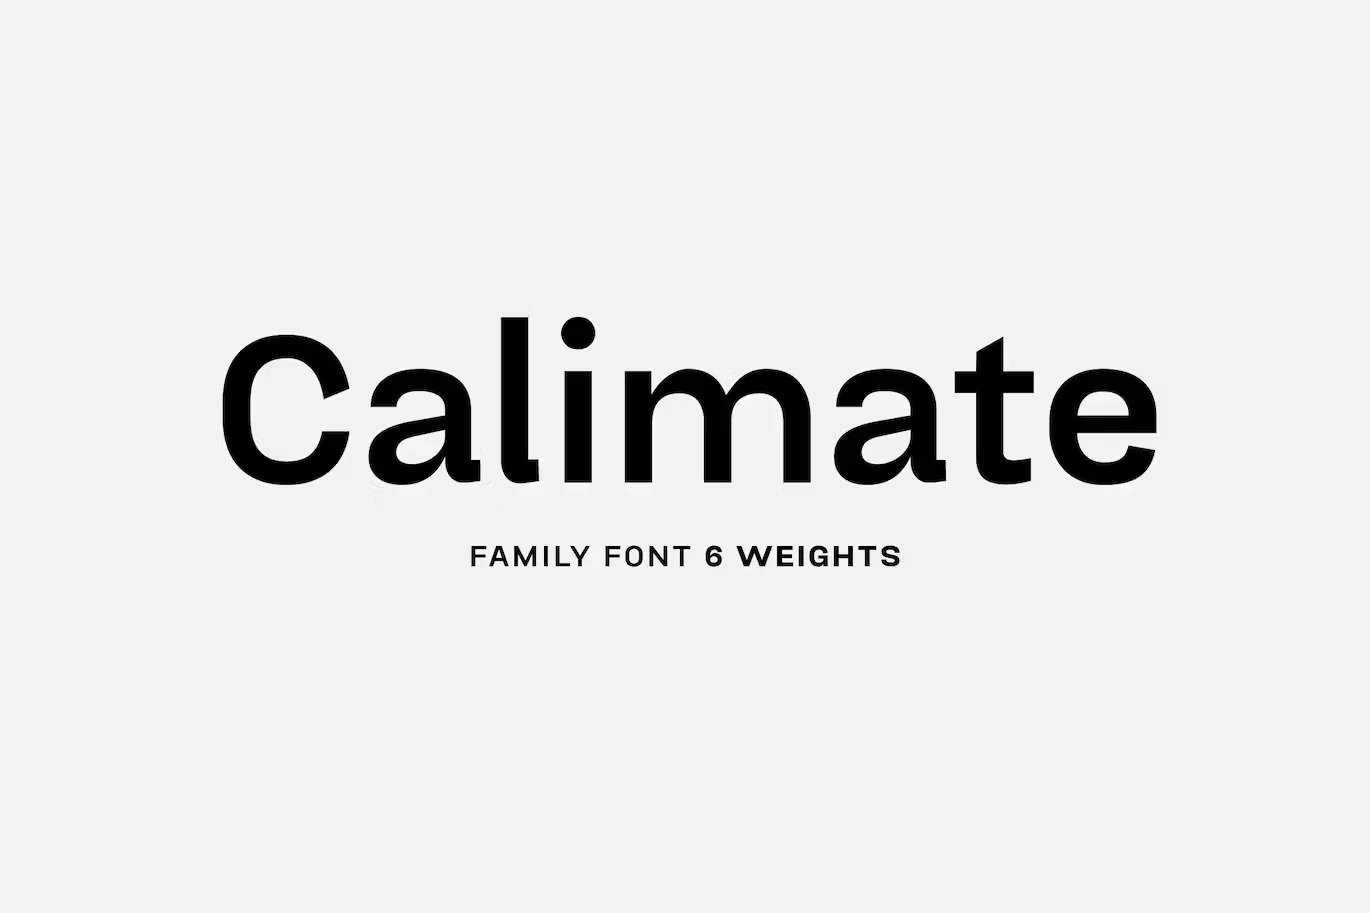 Calimate Sans Serif Family